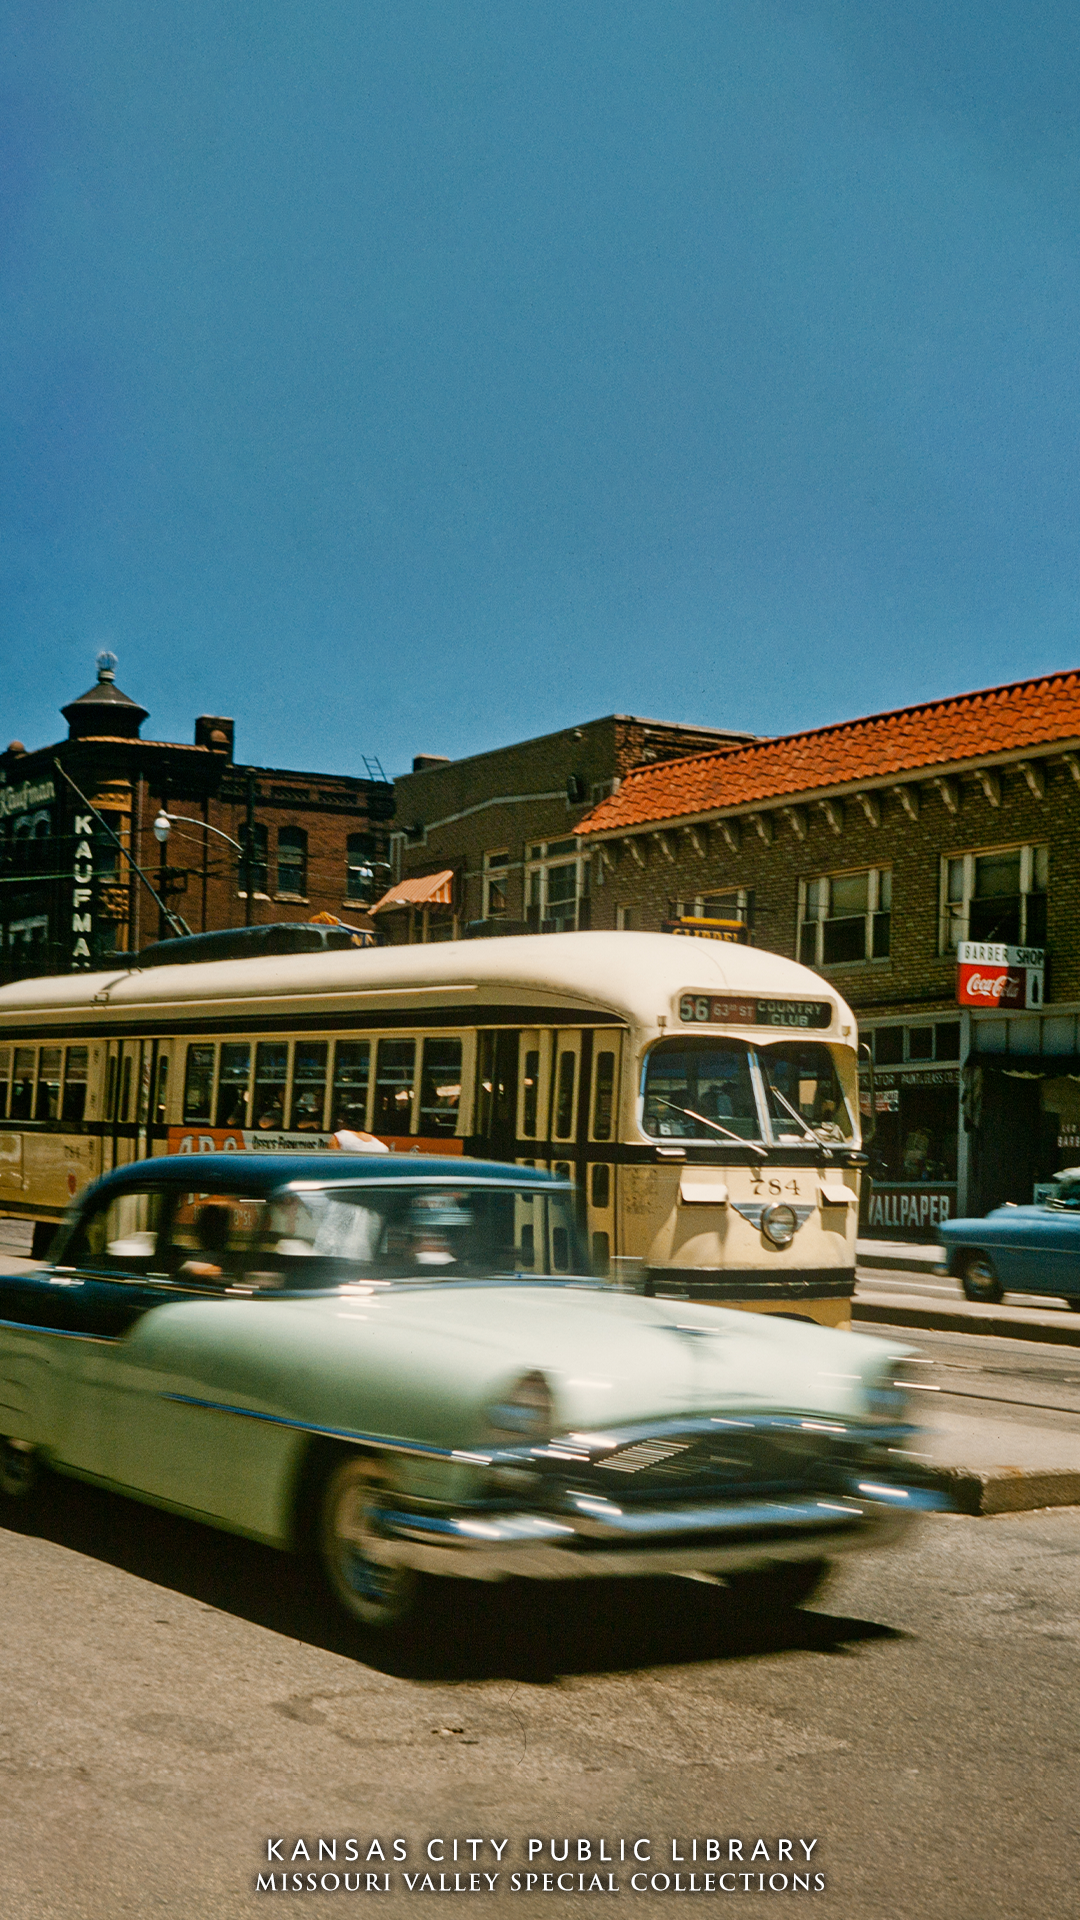 1950s car and streetcar on street